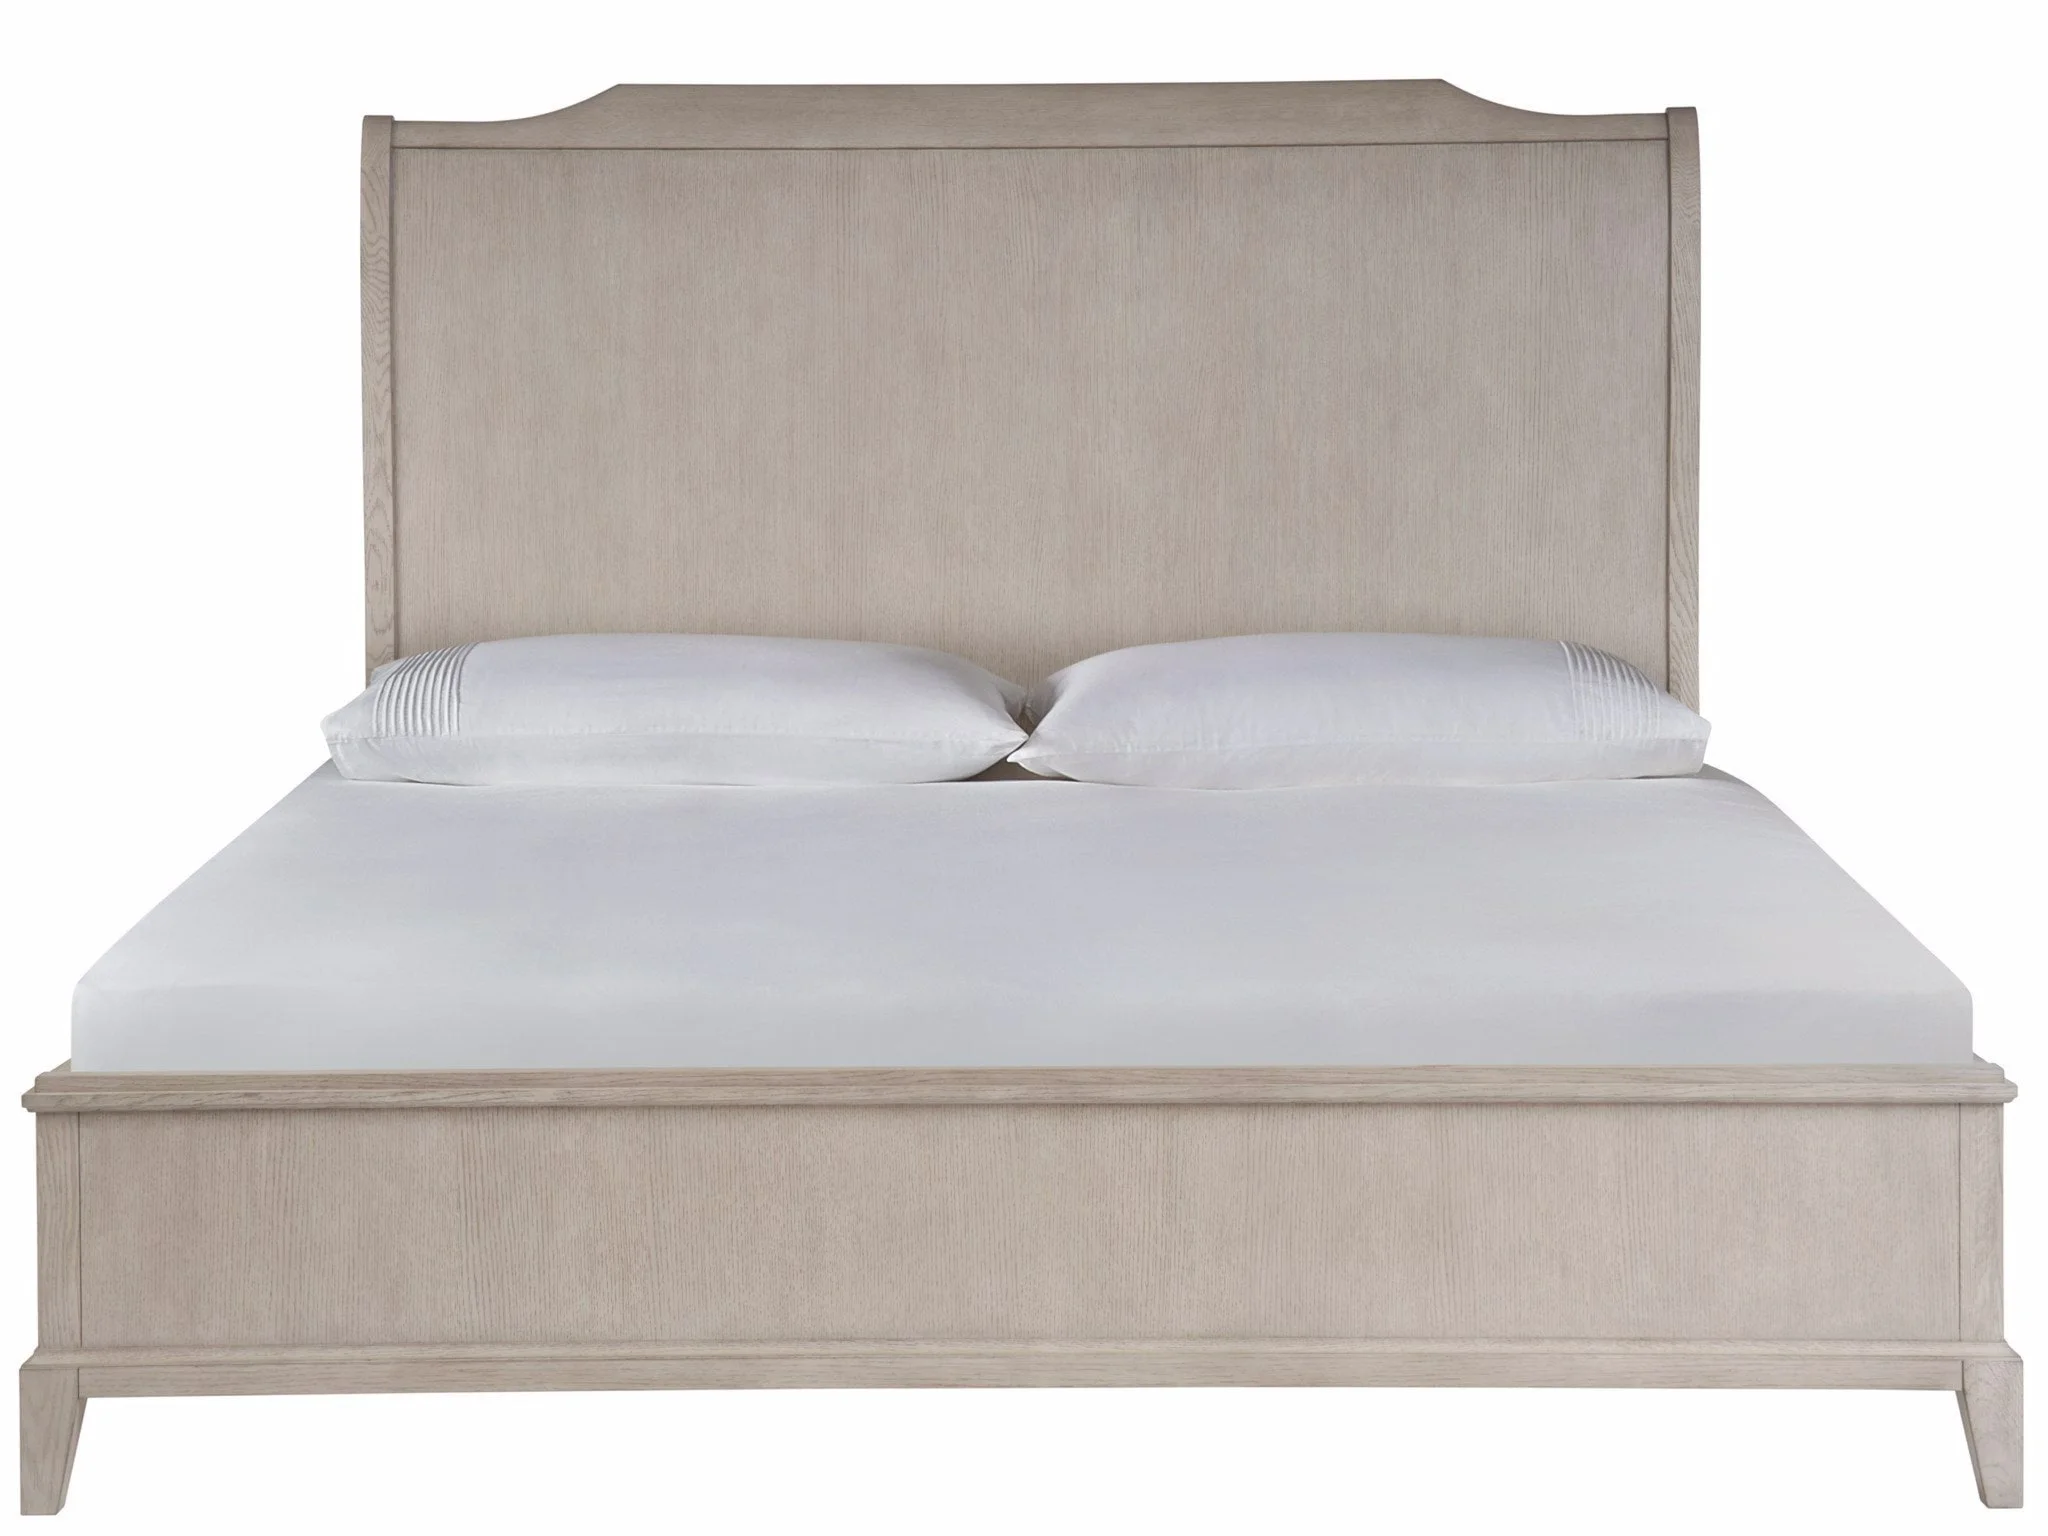 Oconnor Designs Coalesce Contemporary Queen Panel Bed With Low Profile Footboard Sprintz 